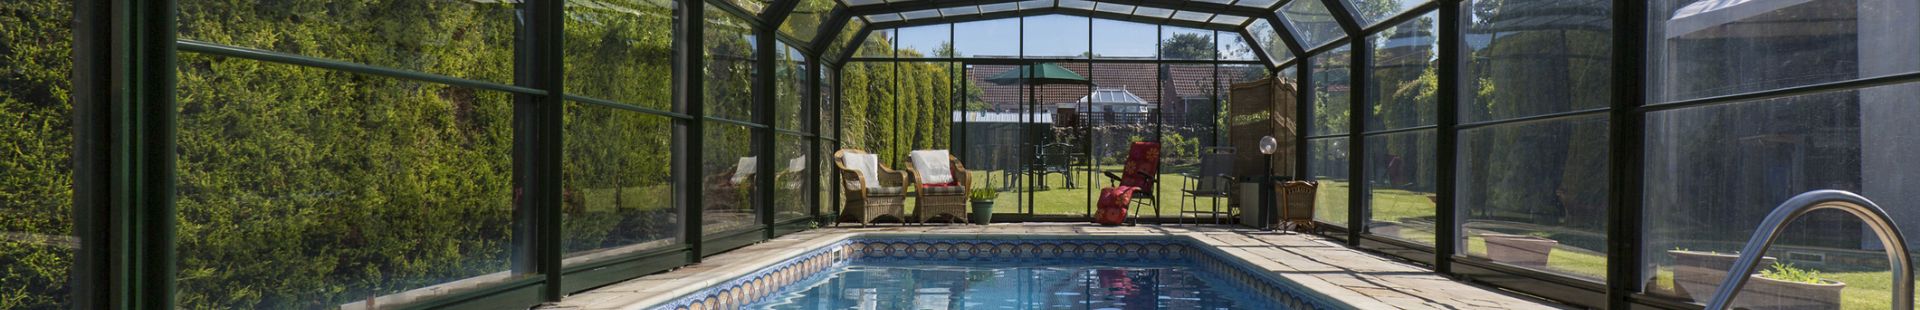 Backyard pool with premium pool enclosure installed